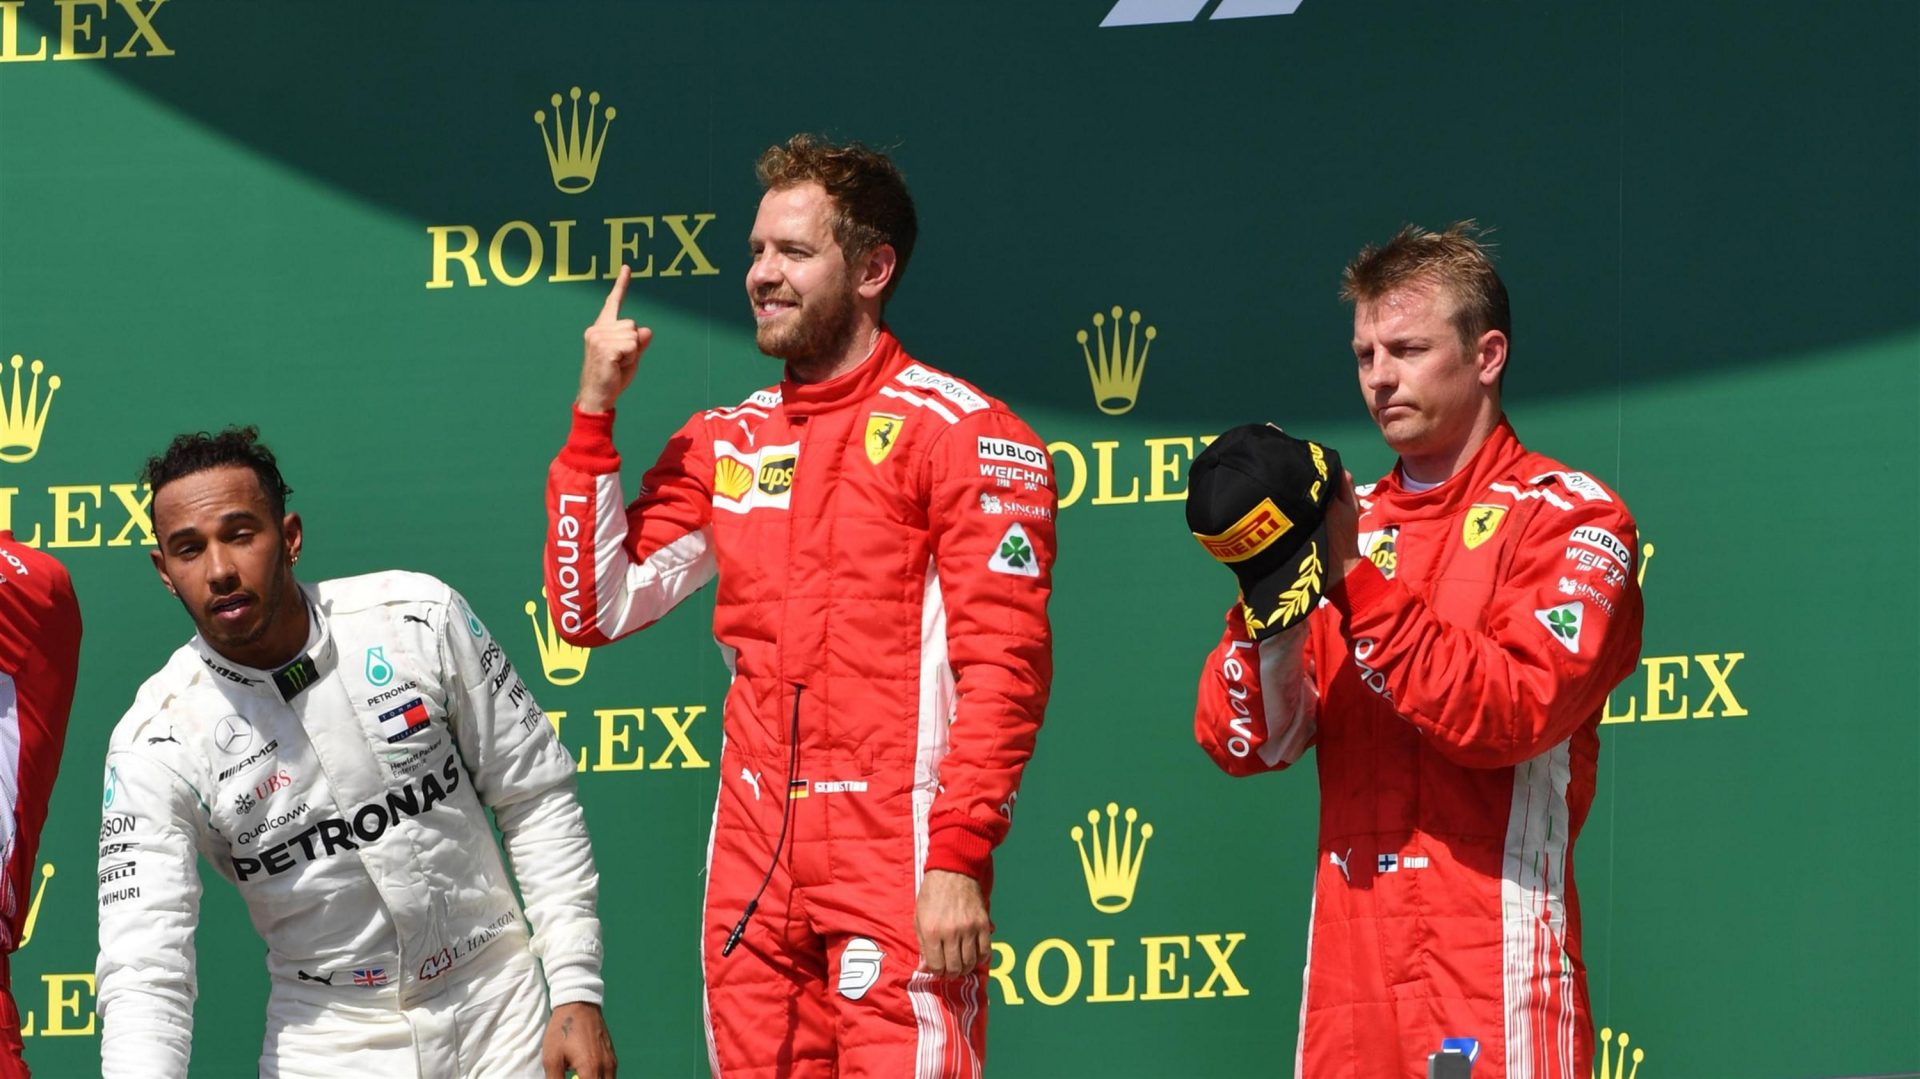 Vettel signals he's #1 again